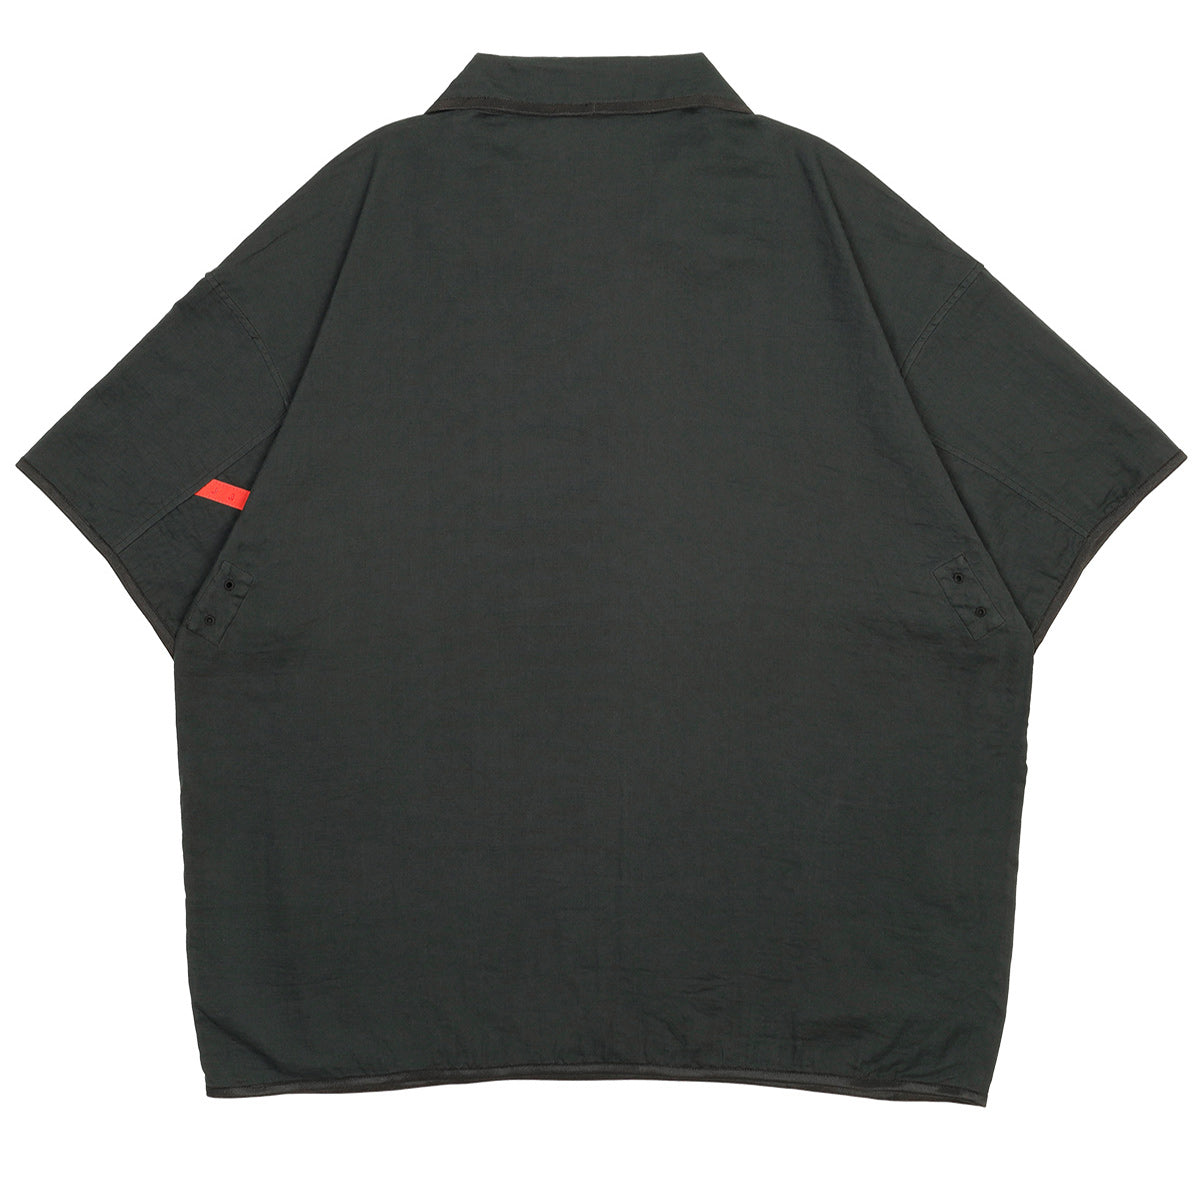 PHINGERIN (フィンガリン) - PIPE TOP SKIPPER S/S GAUZE Tシャツ 